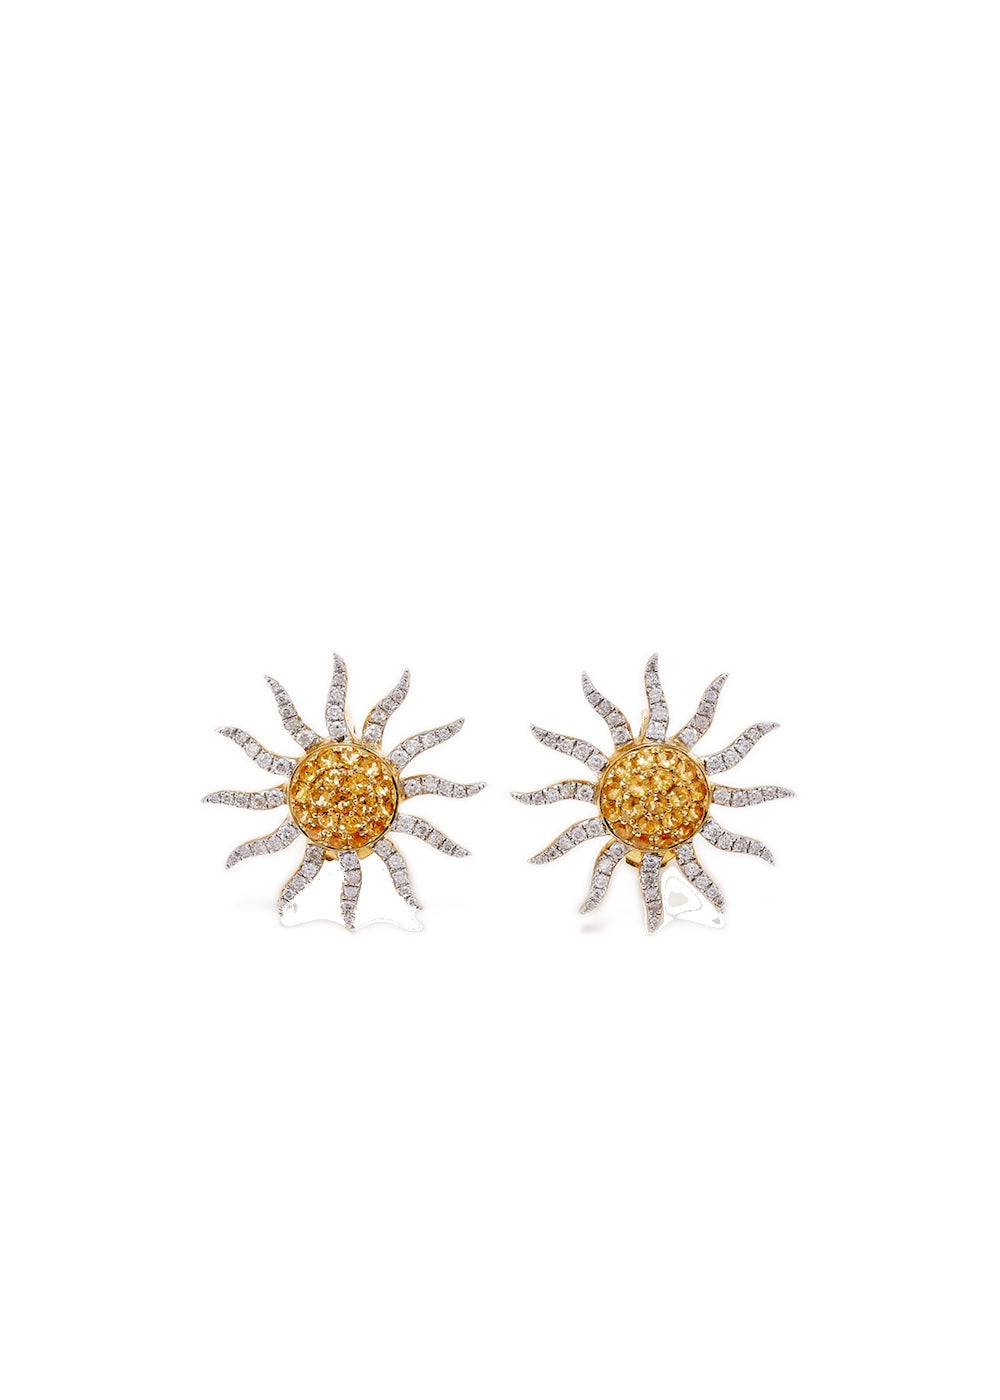 Bo Soleil 9k yellow gold, citrine and diamond earrings